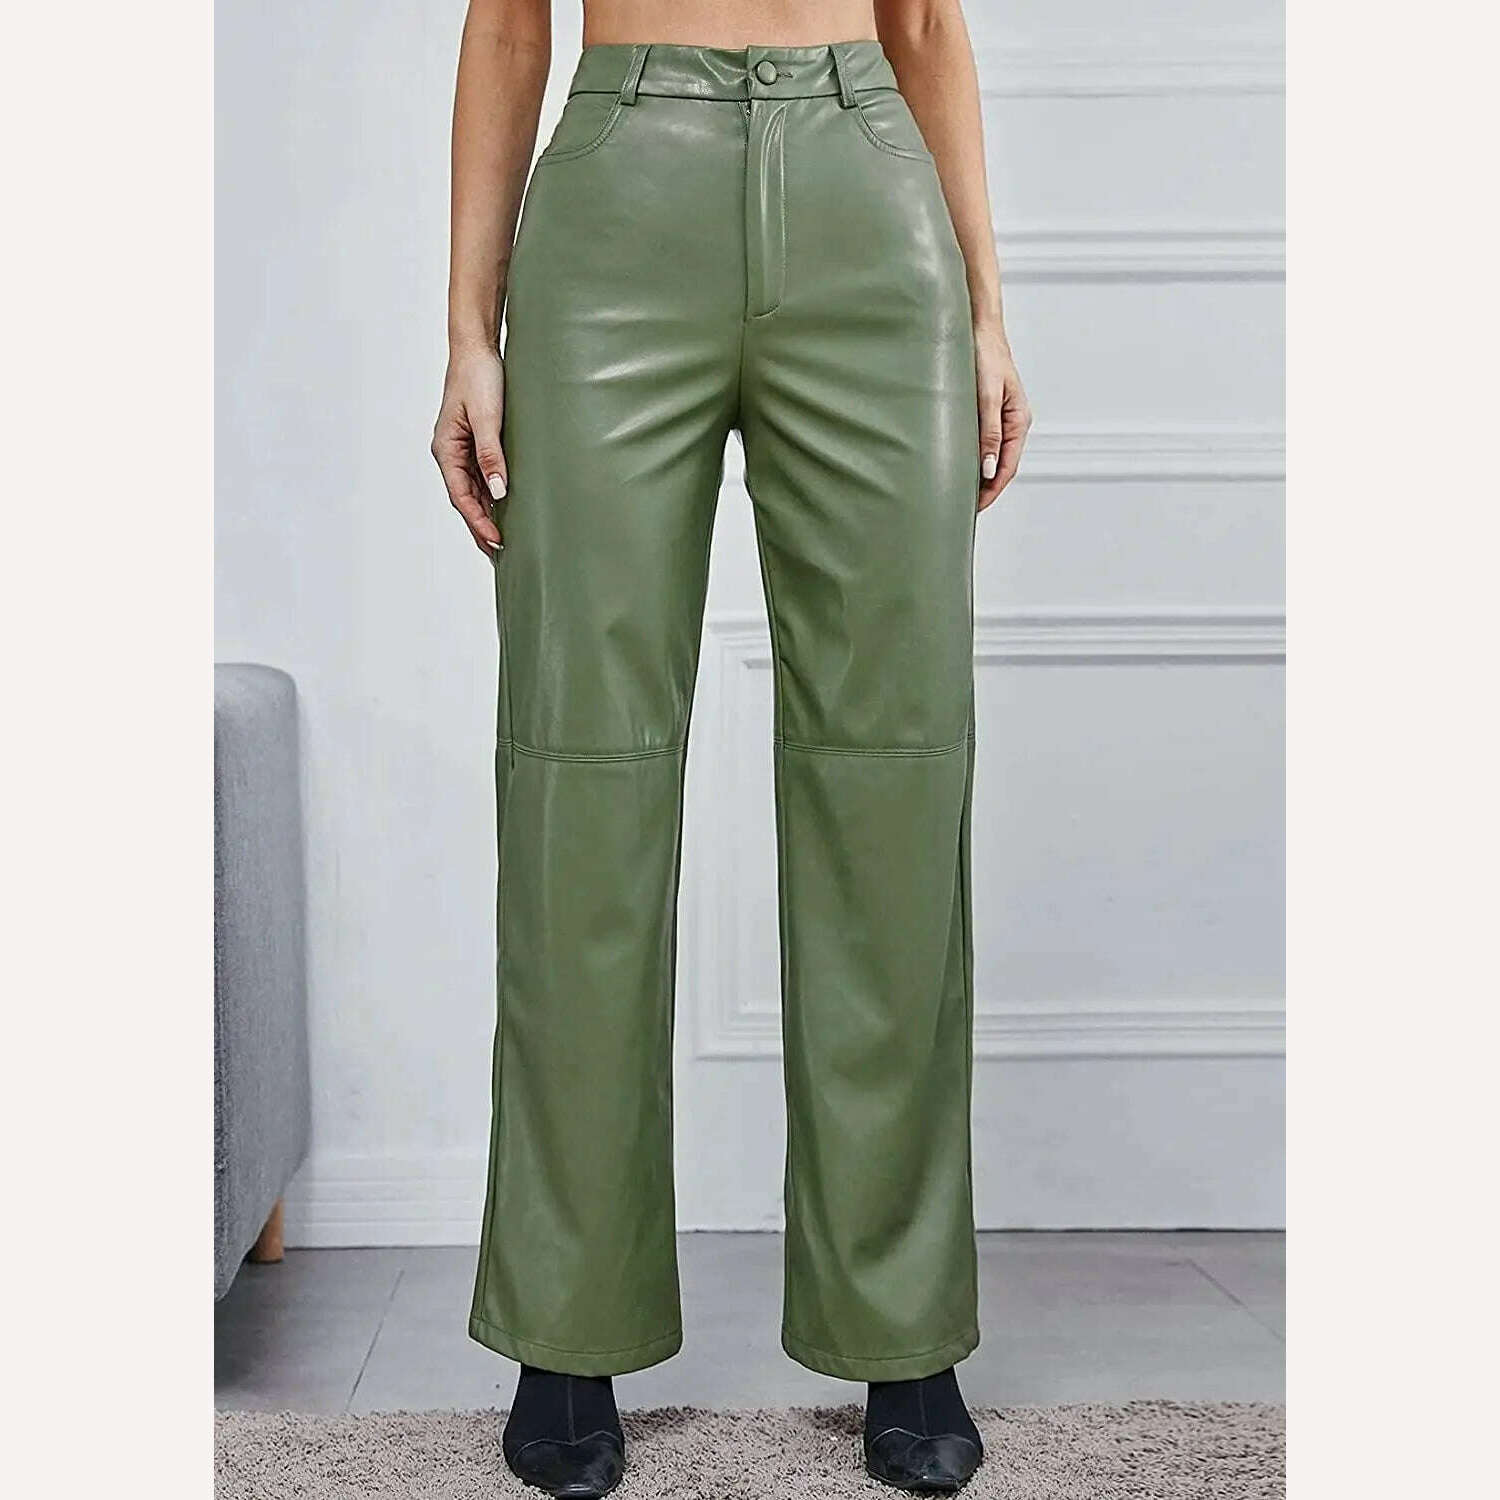 KIMLUD, PU Leather Pants High Waist Pockets Women&#39;s Green Black Wide Leg Pants 2021 Autumn Winter Fashion New TrousersBlusas Loose Shirt, Green / XS, KIMLUD Women's Clothes